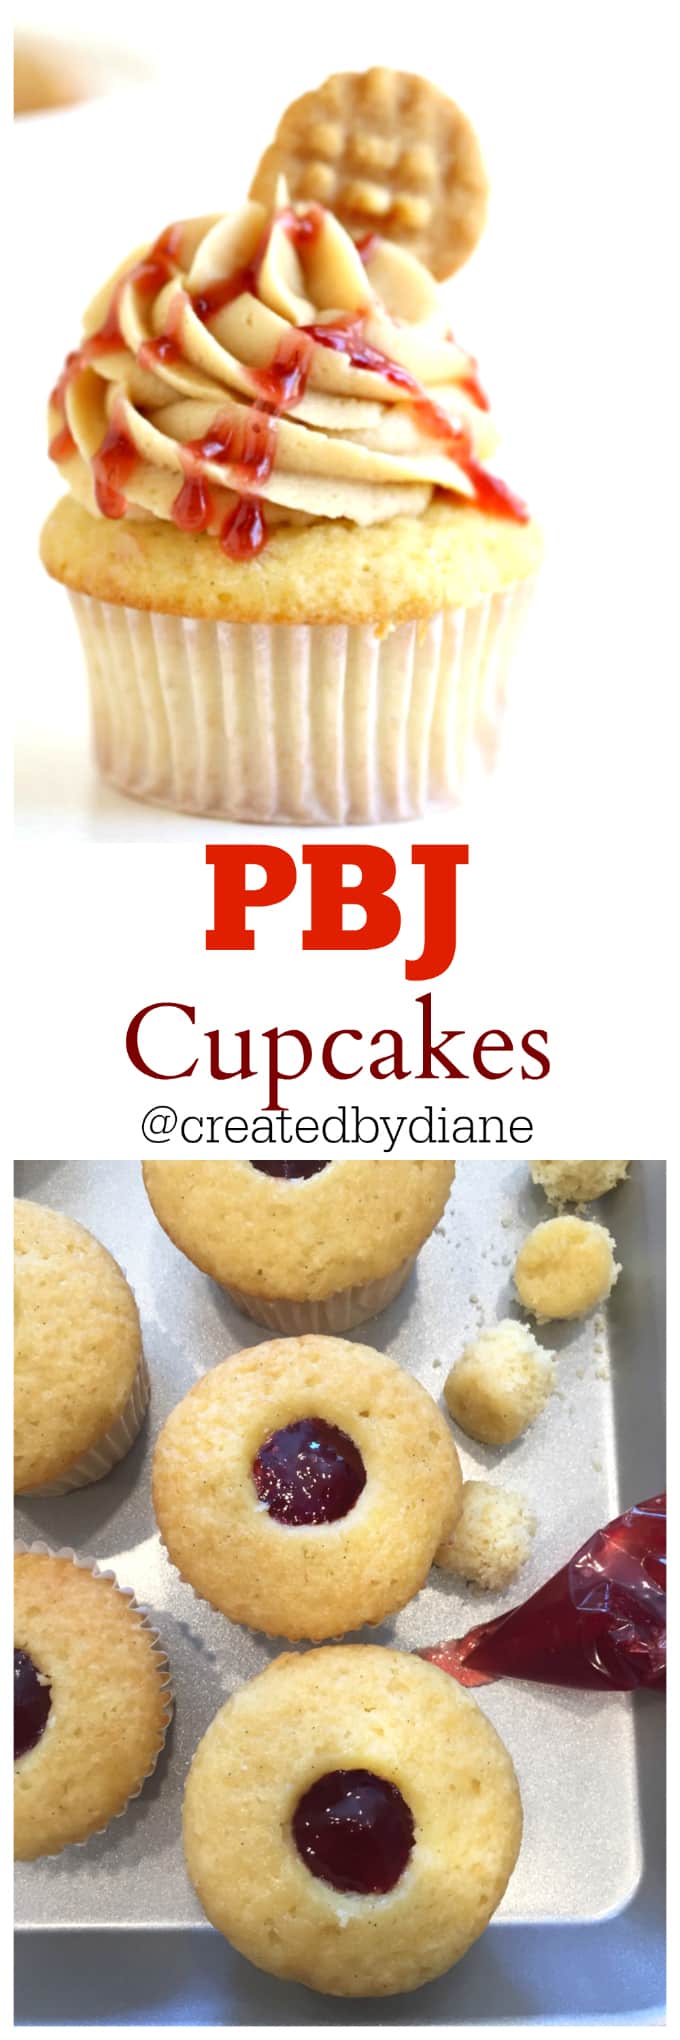 pbj cupcakes from @createdbydiane